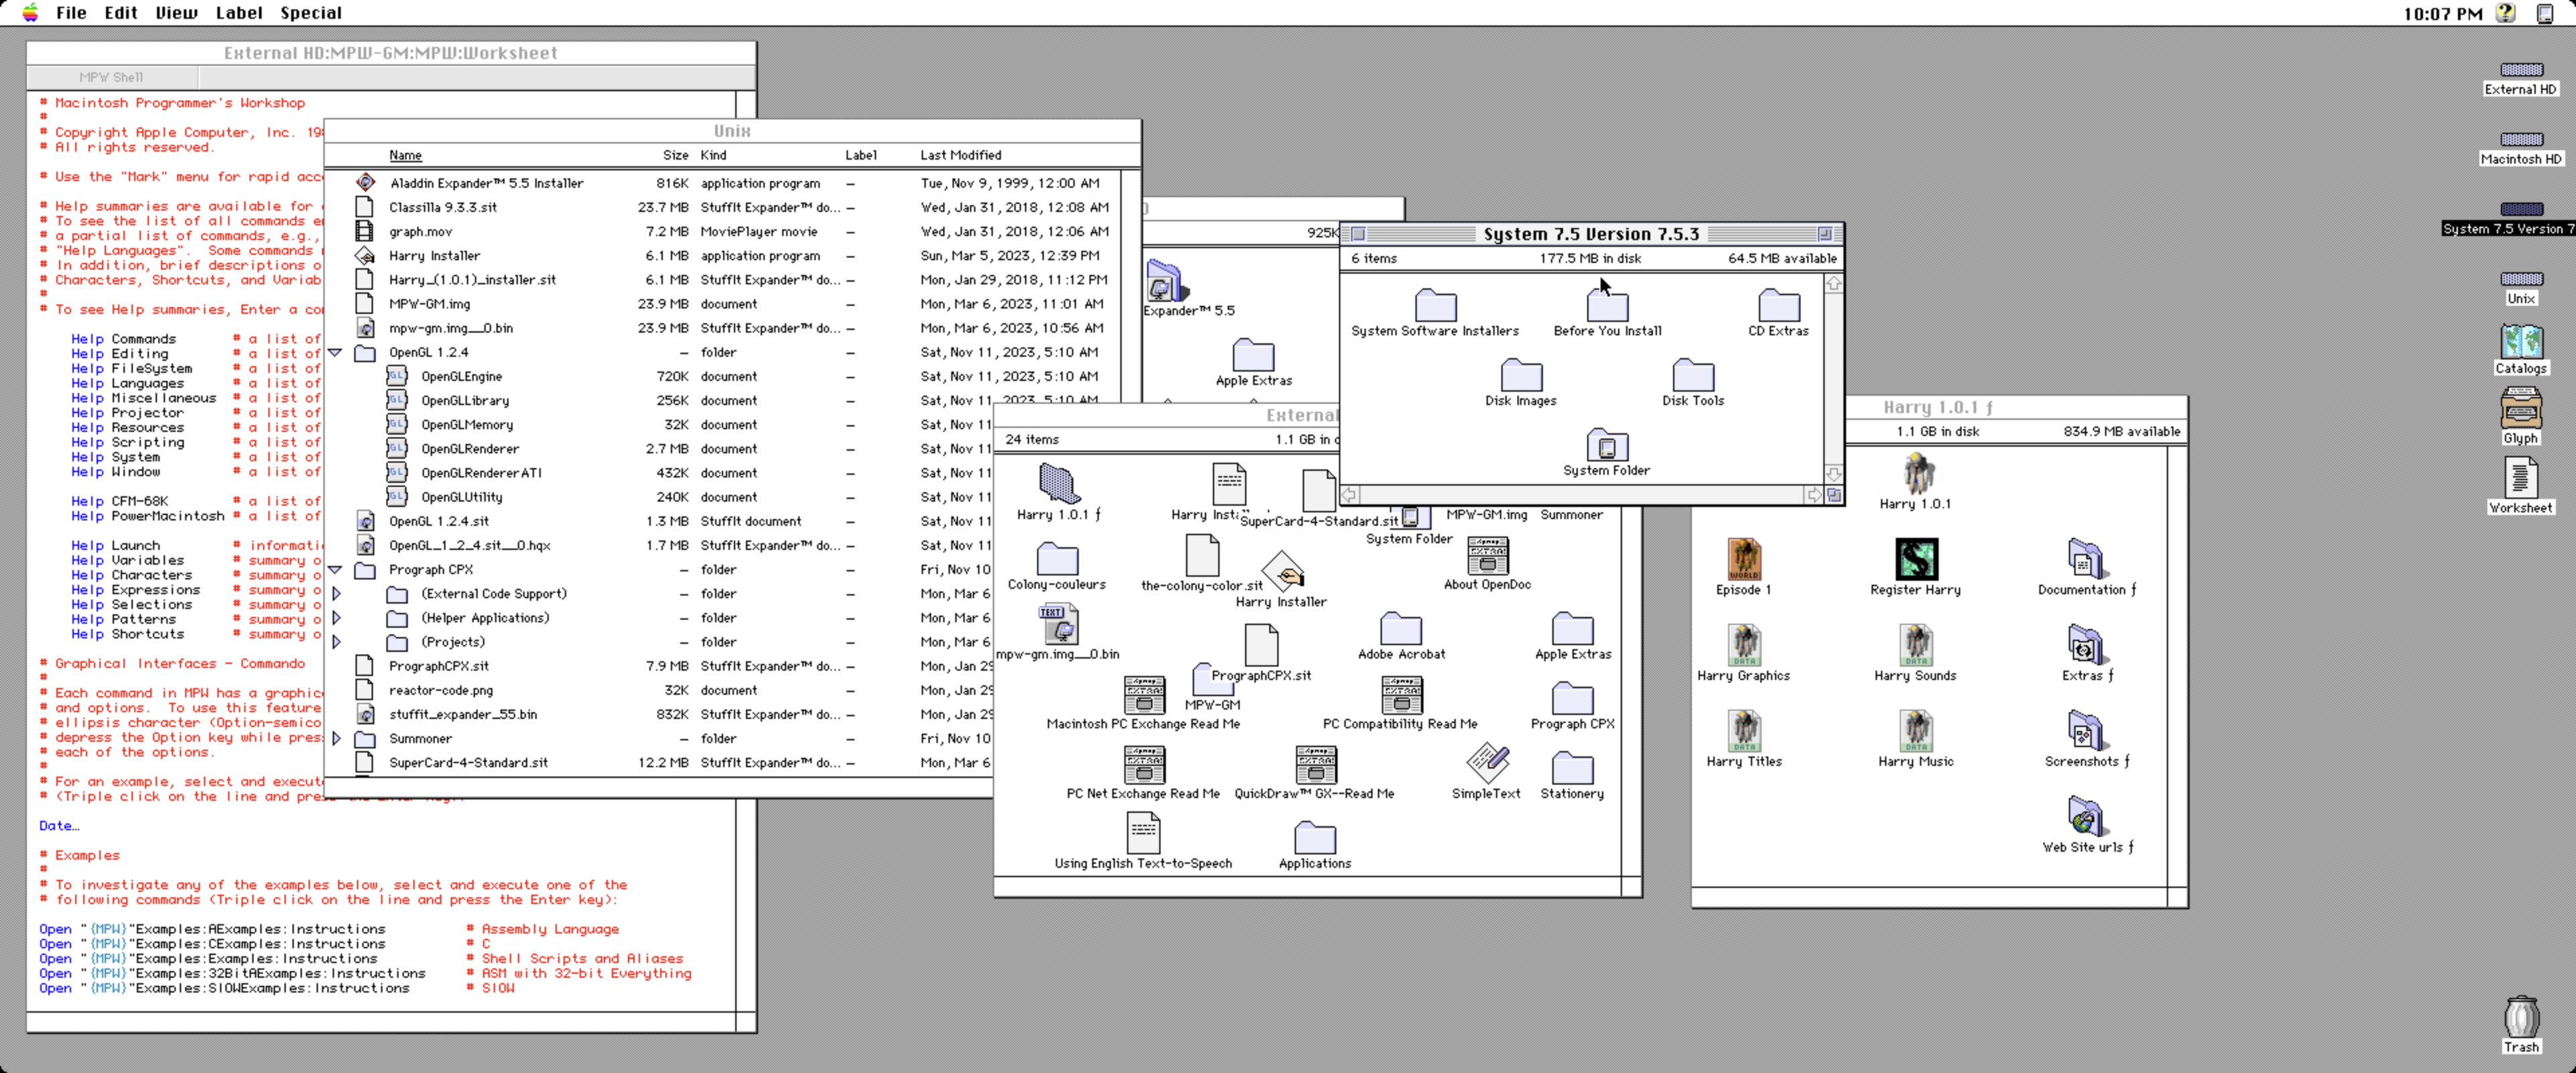 A 4k ultrawide classic MacOS desktop screenshot featuring various Finder windows and MPW Workshop